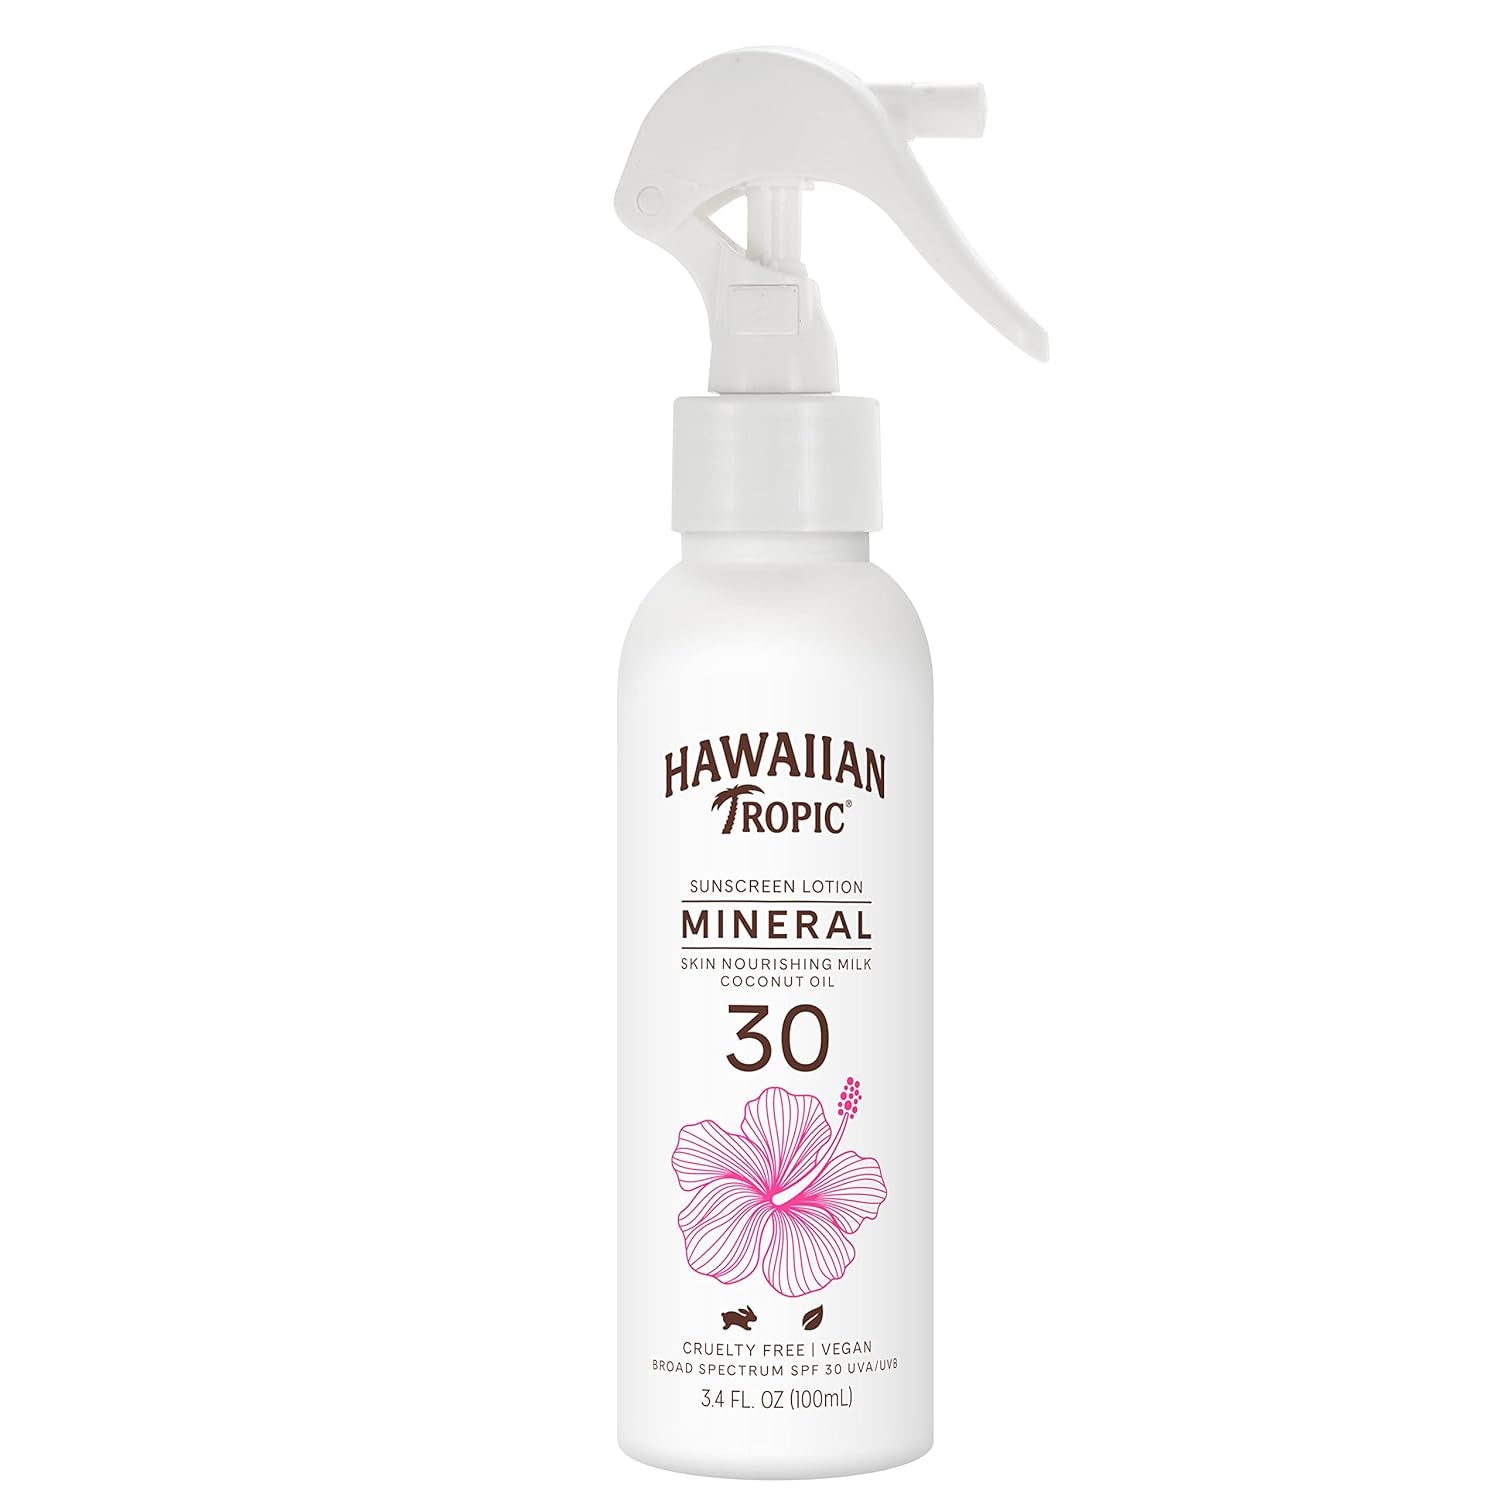 "Hawaiian Tropic Hydrating Mineral Sun Milk SPF 50 - Travel Size 3.4oz"